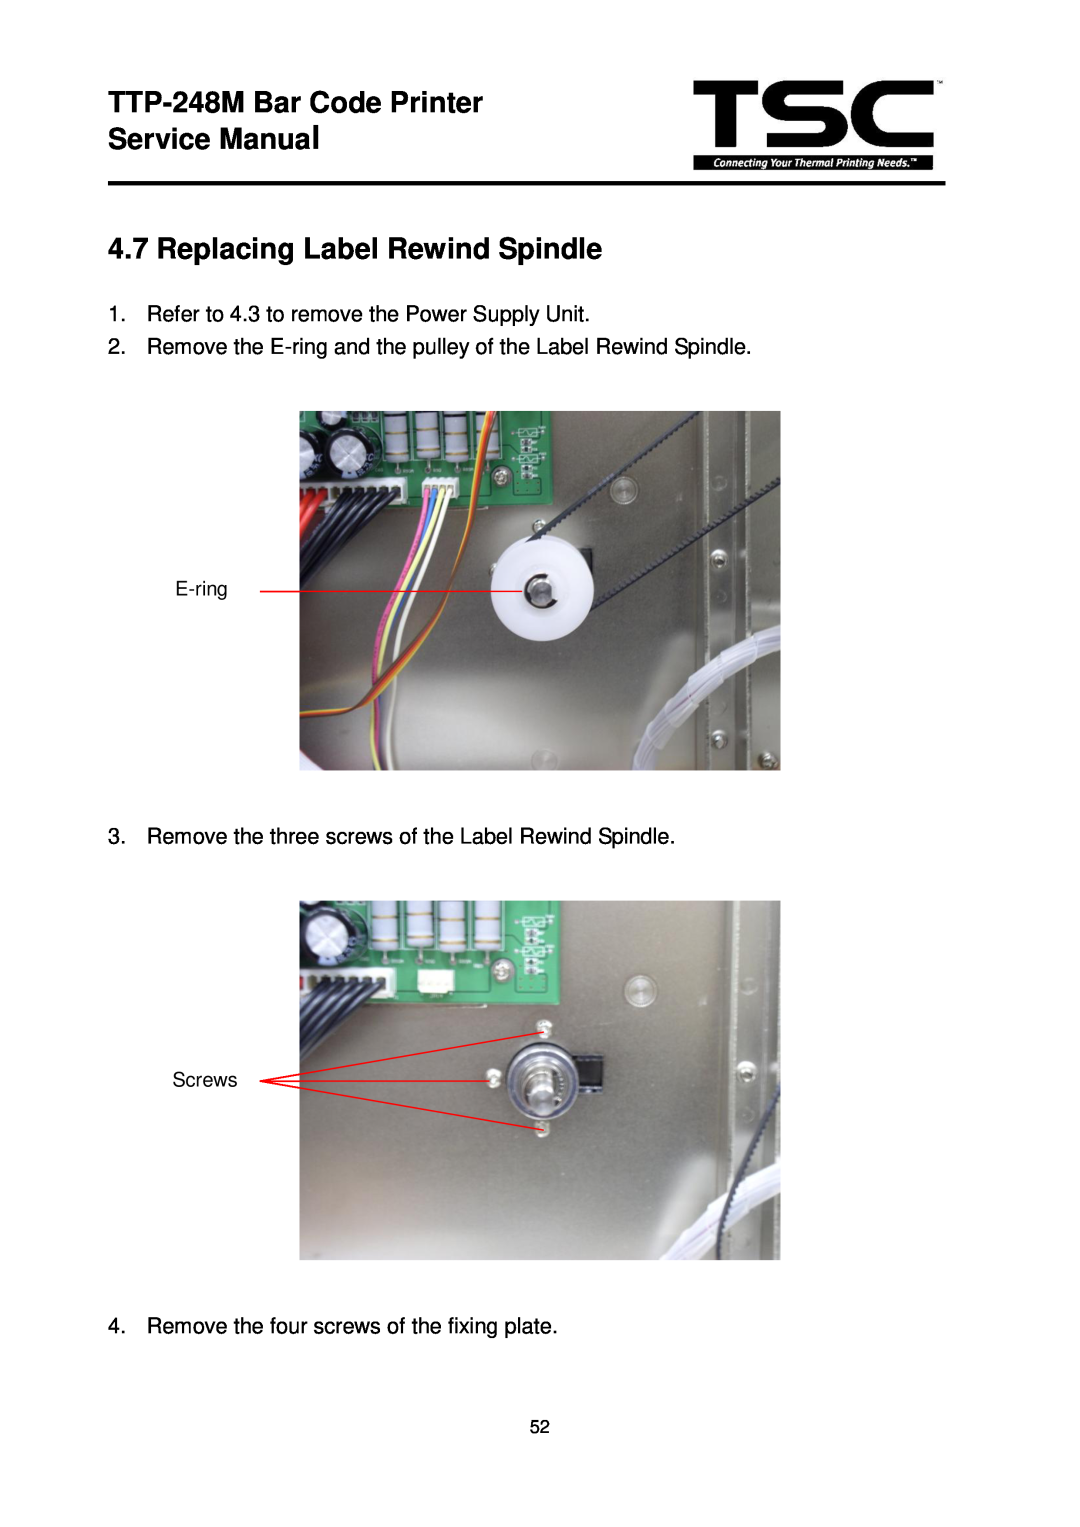 The Speaker Company TTP 248M service manual Replacing Label Rewind Spindle, TTP-248M Bar Code Printer Service Manual 